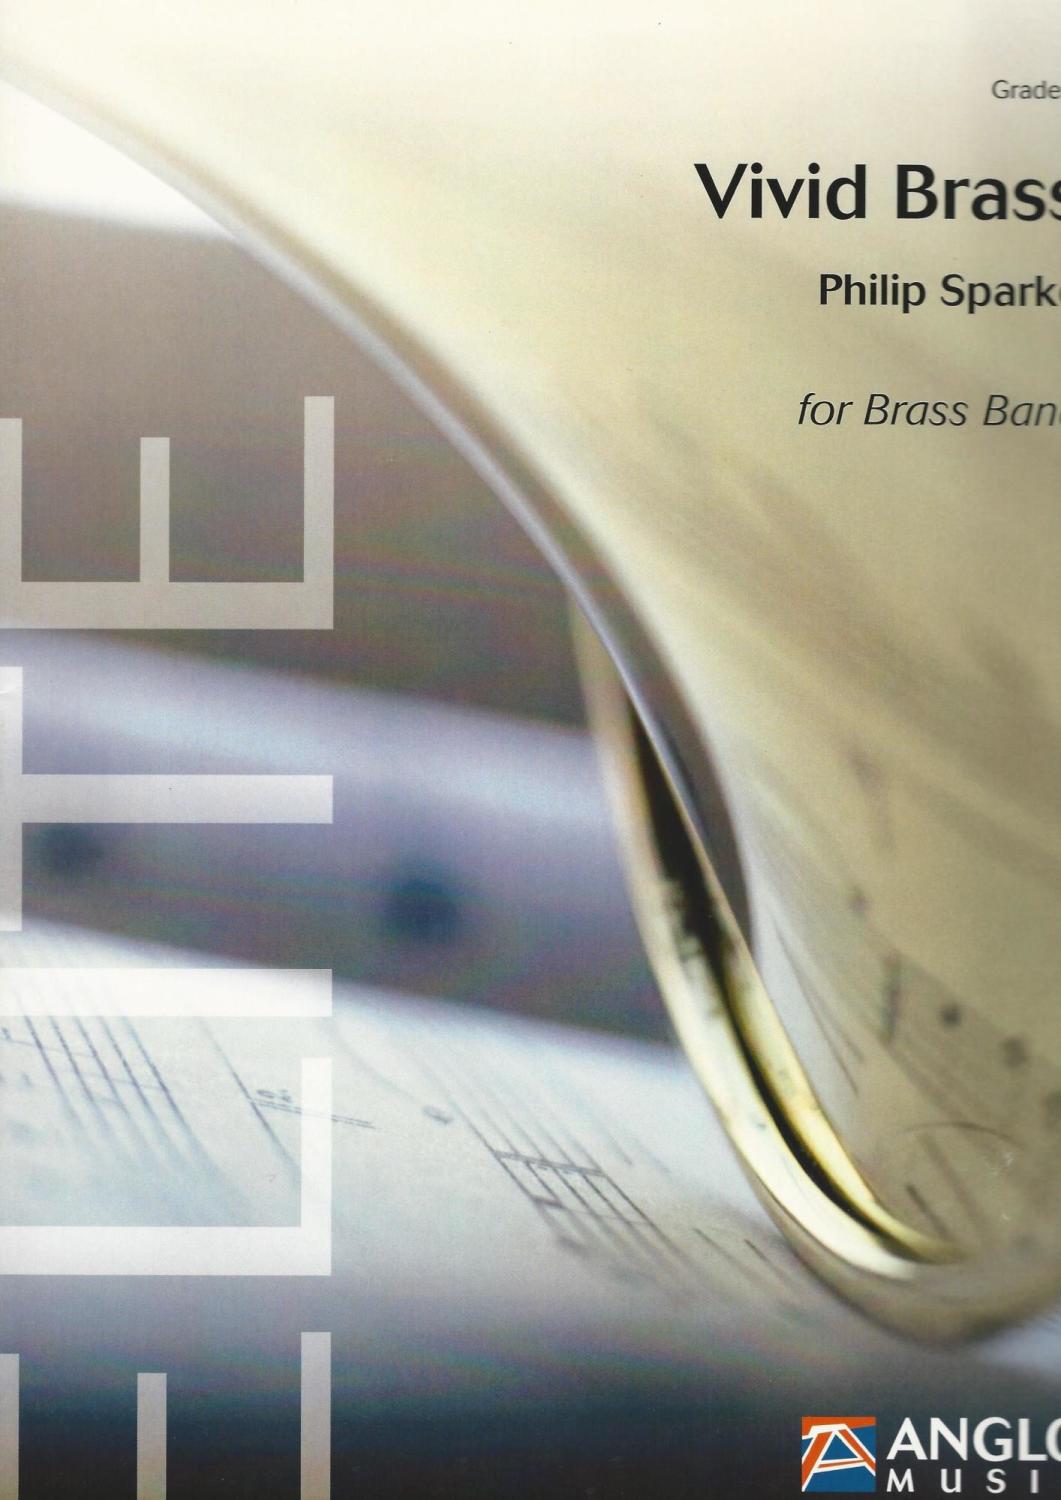 Vivid Brass for Brass Band - Philip Sparke